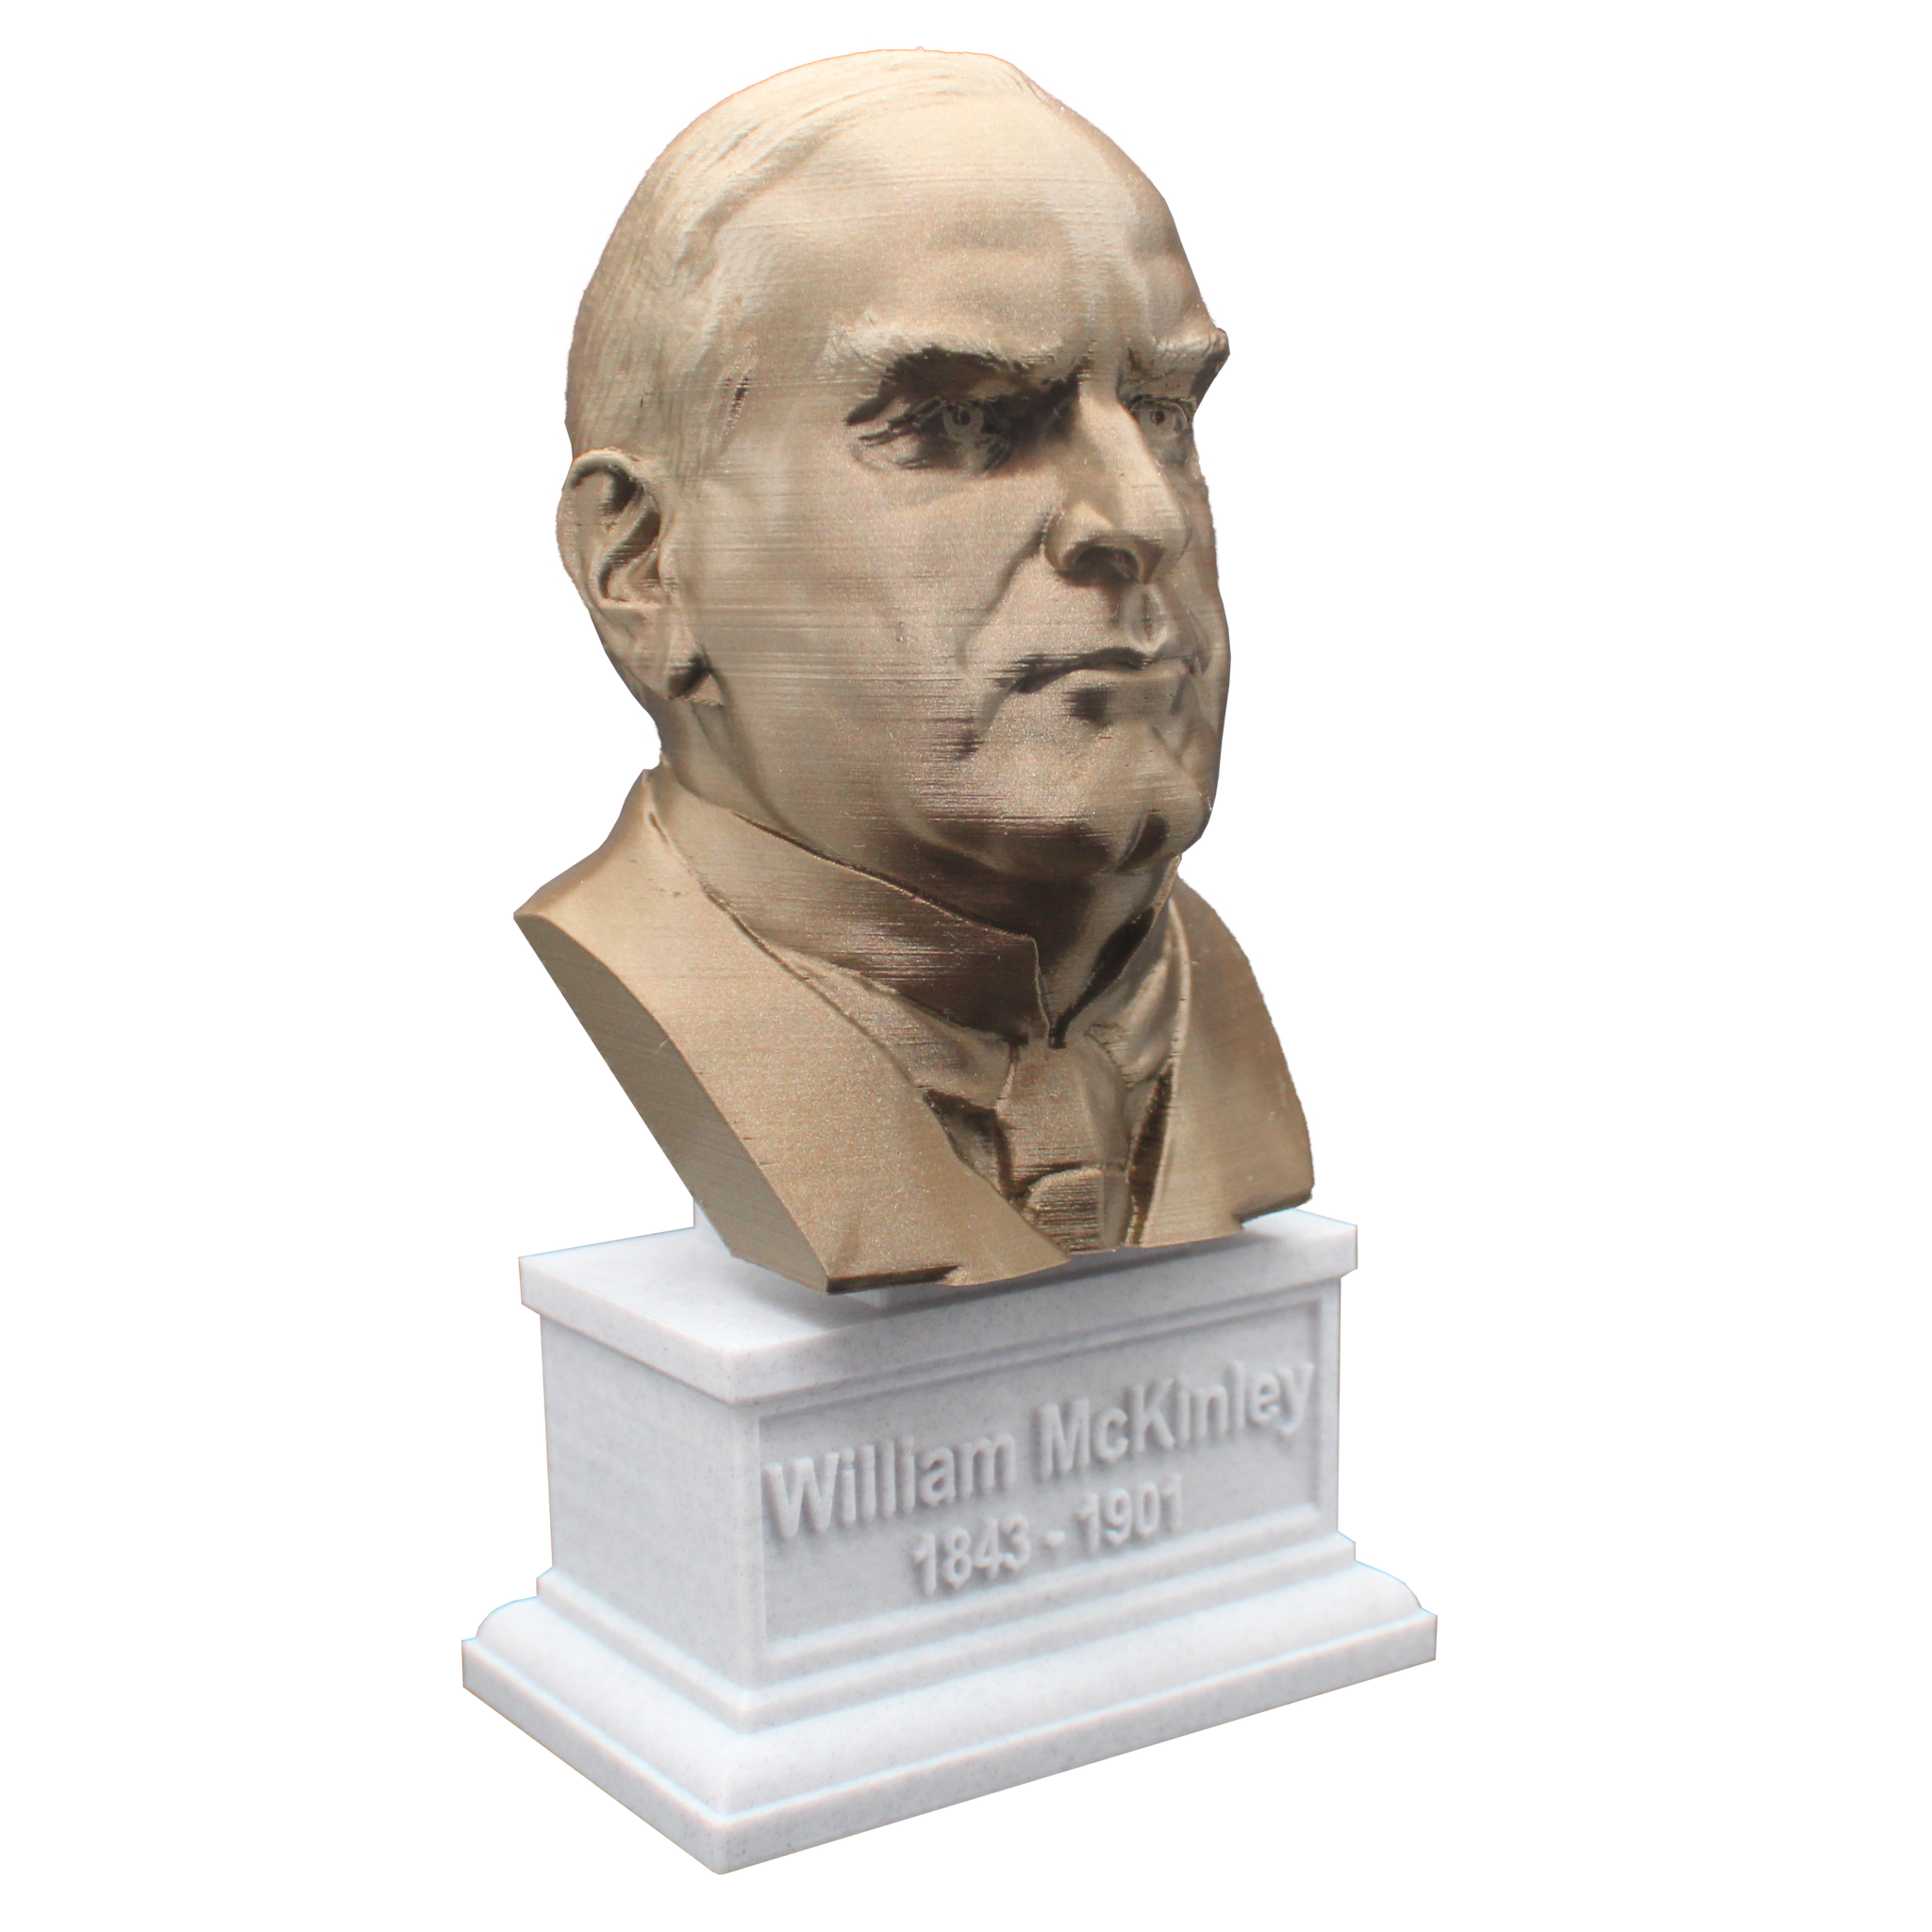 William McKinley, 25th US President, Sculpture Bust on Box Plinth